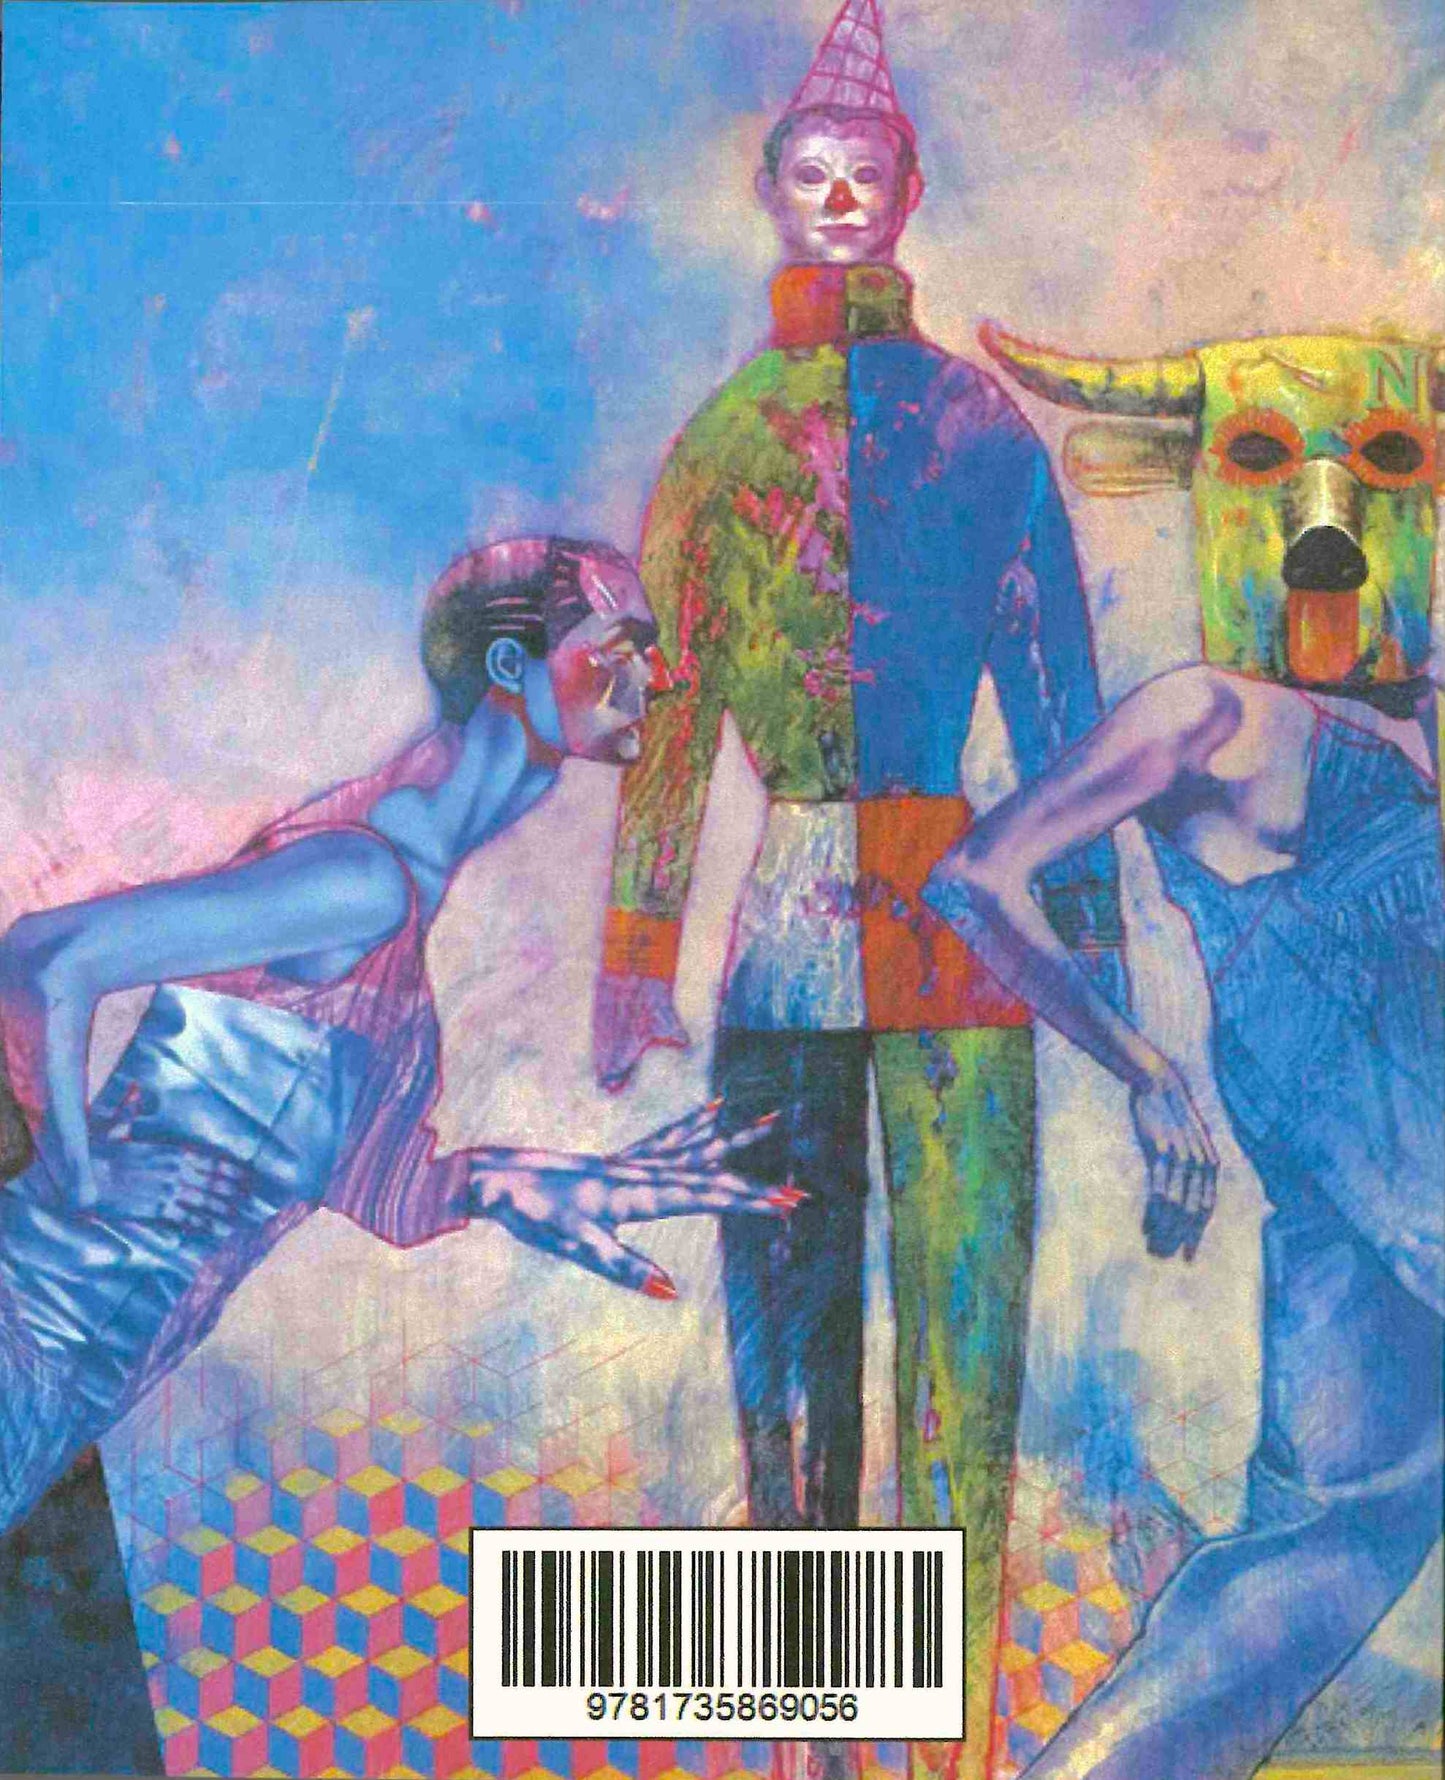 sin cesar literary & art magazine #13 CLIMATE ISSUE